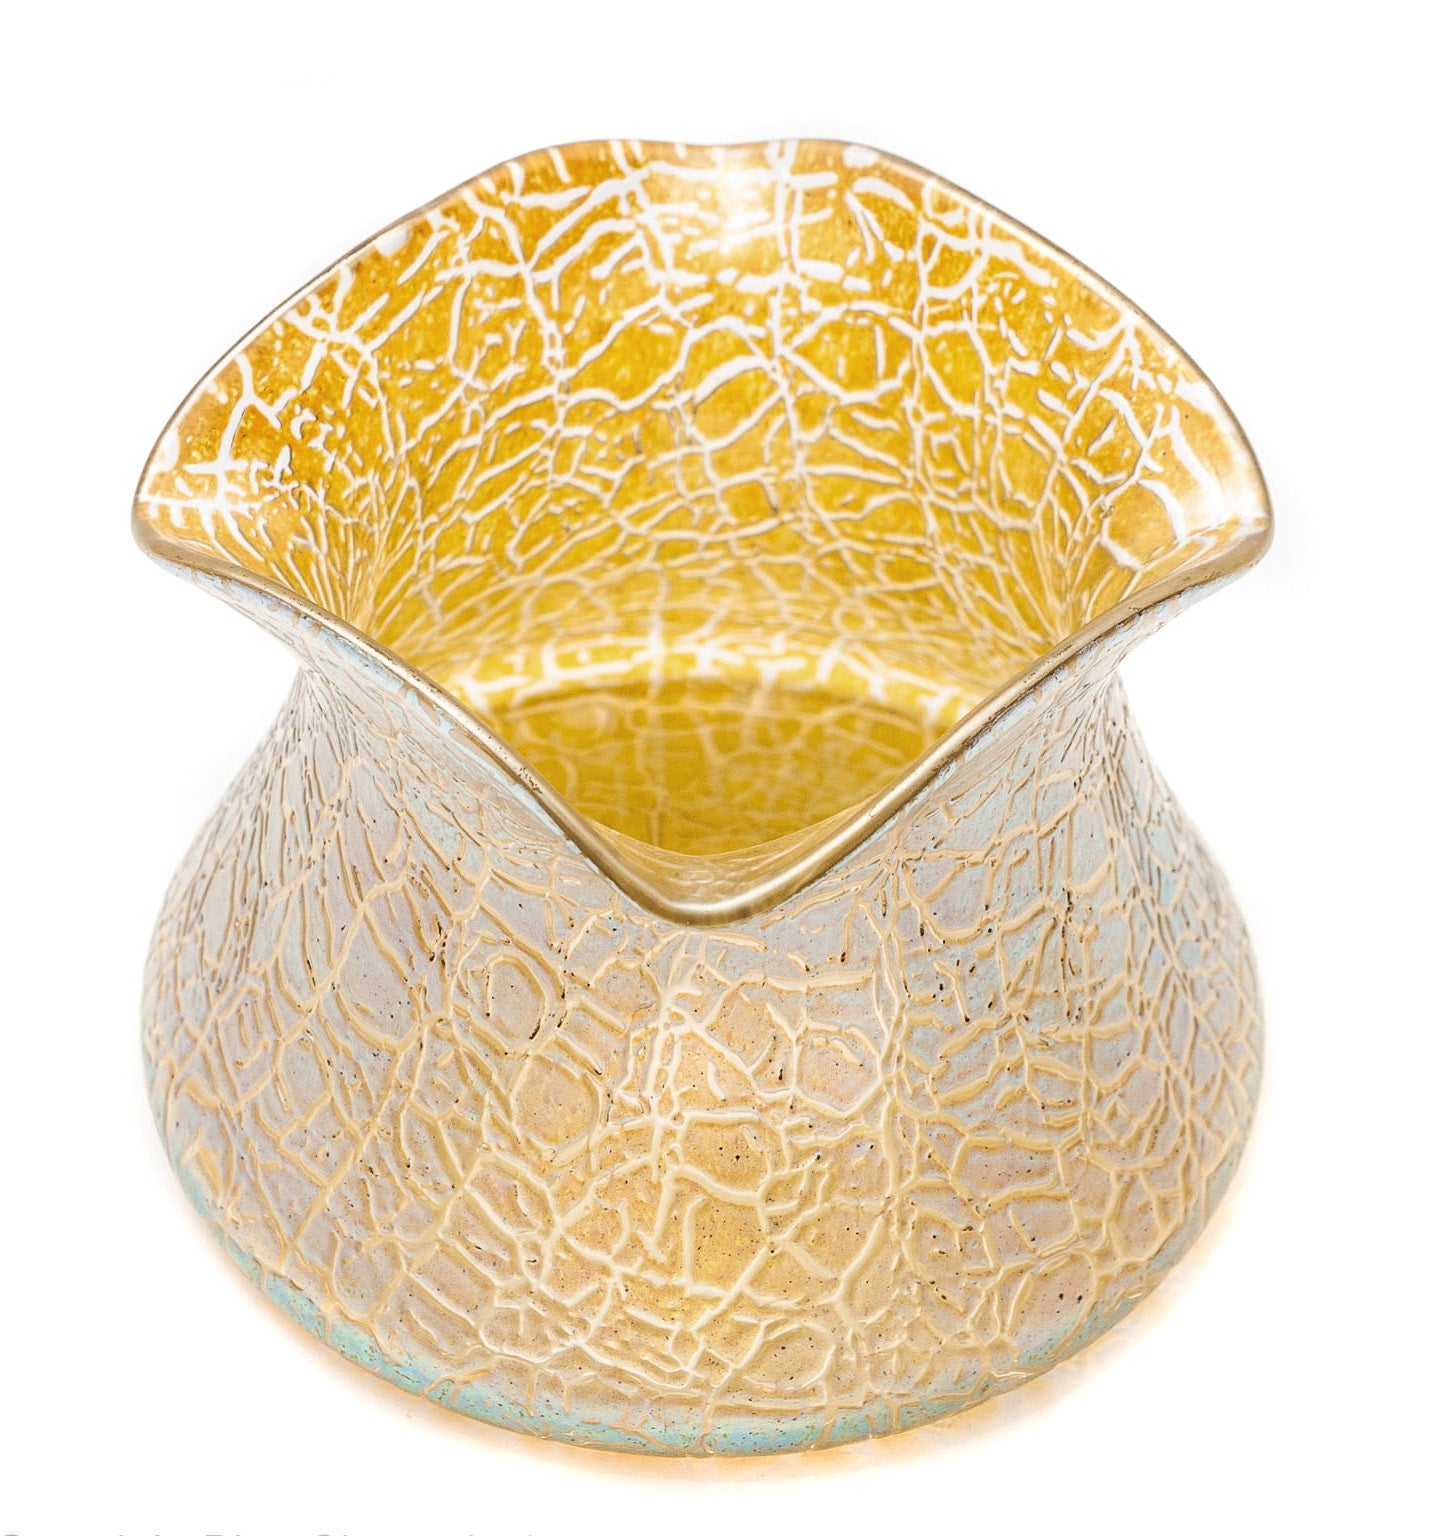 Art Nouveau Loetz Glass Mimosa Candia Vase with Gold Iridescent Finish (Code 1790)